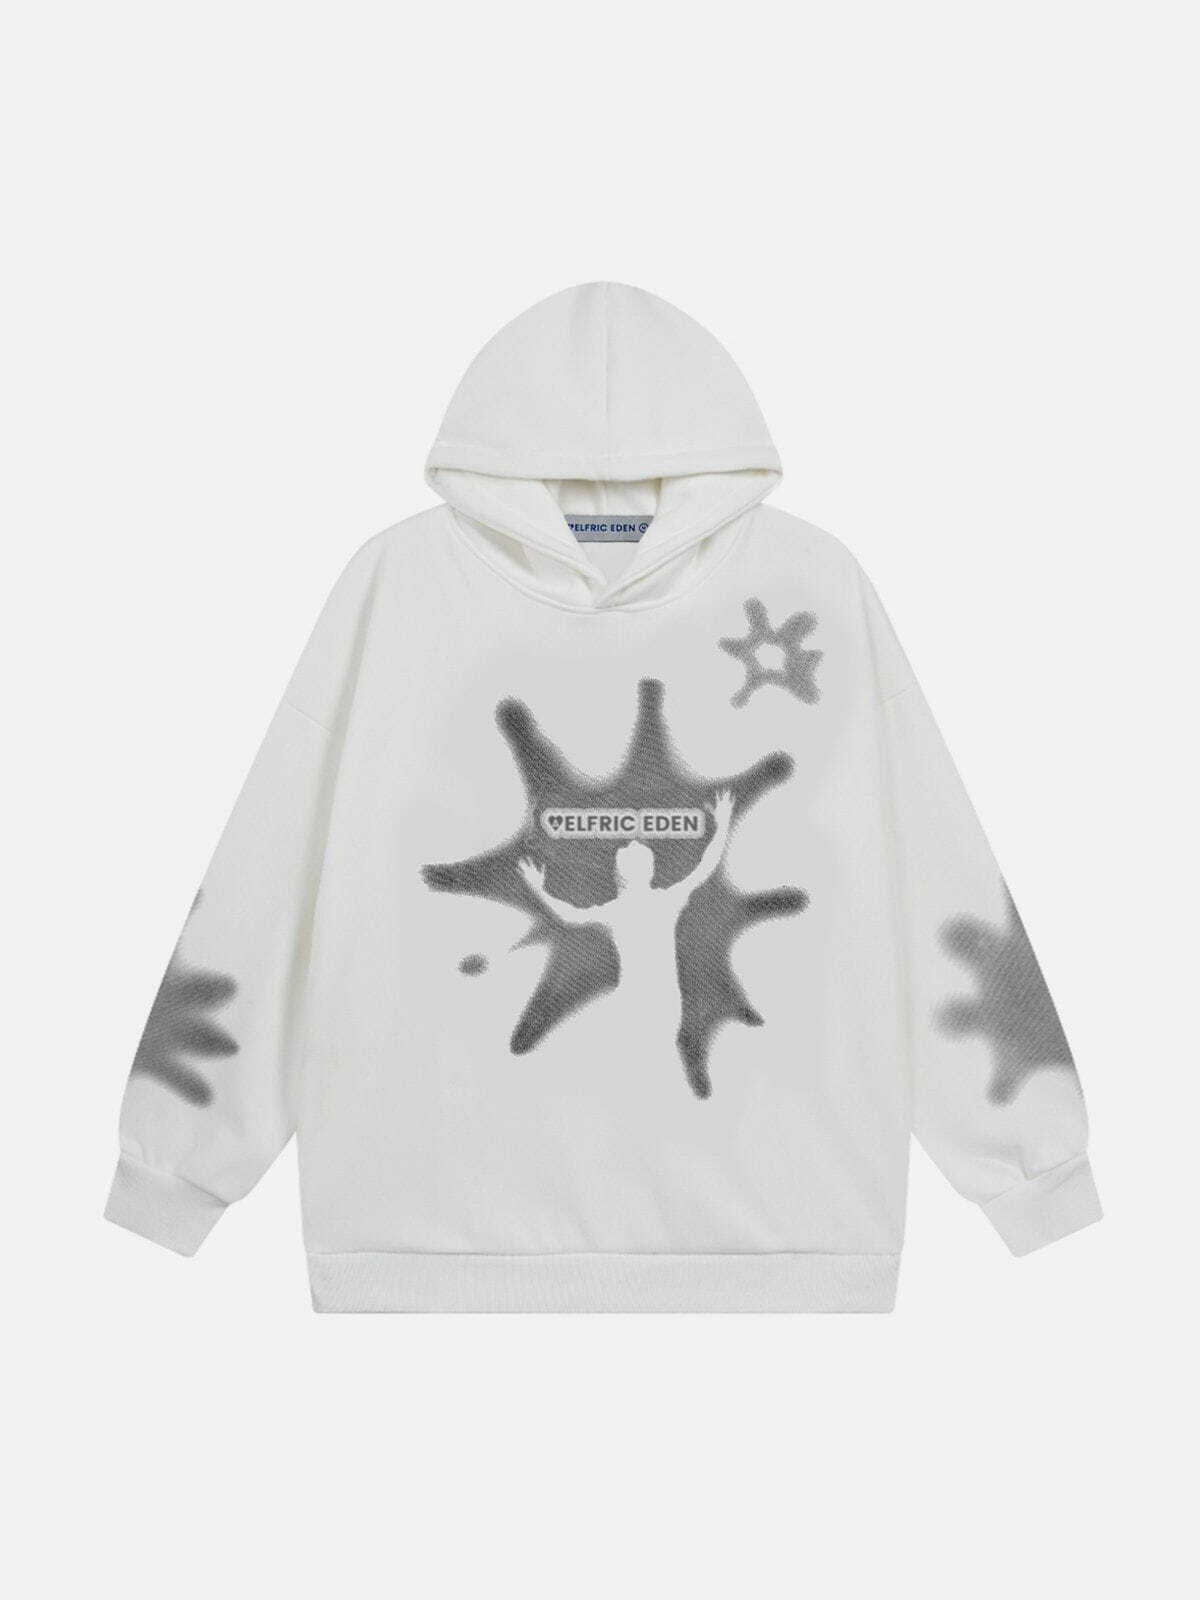 youthful shadow star hoodie   chic urban streetwear 4754